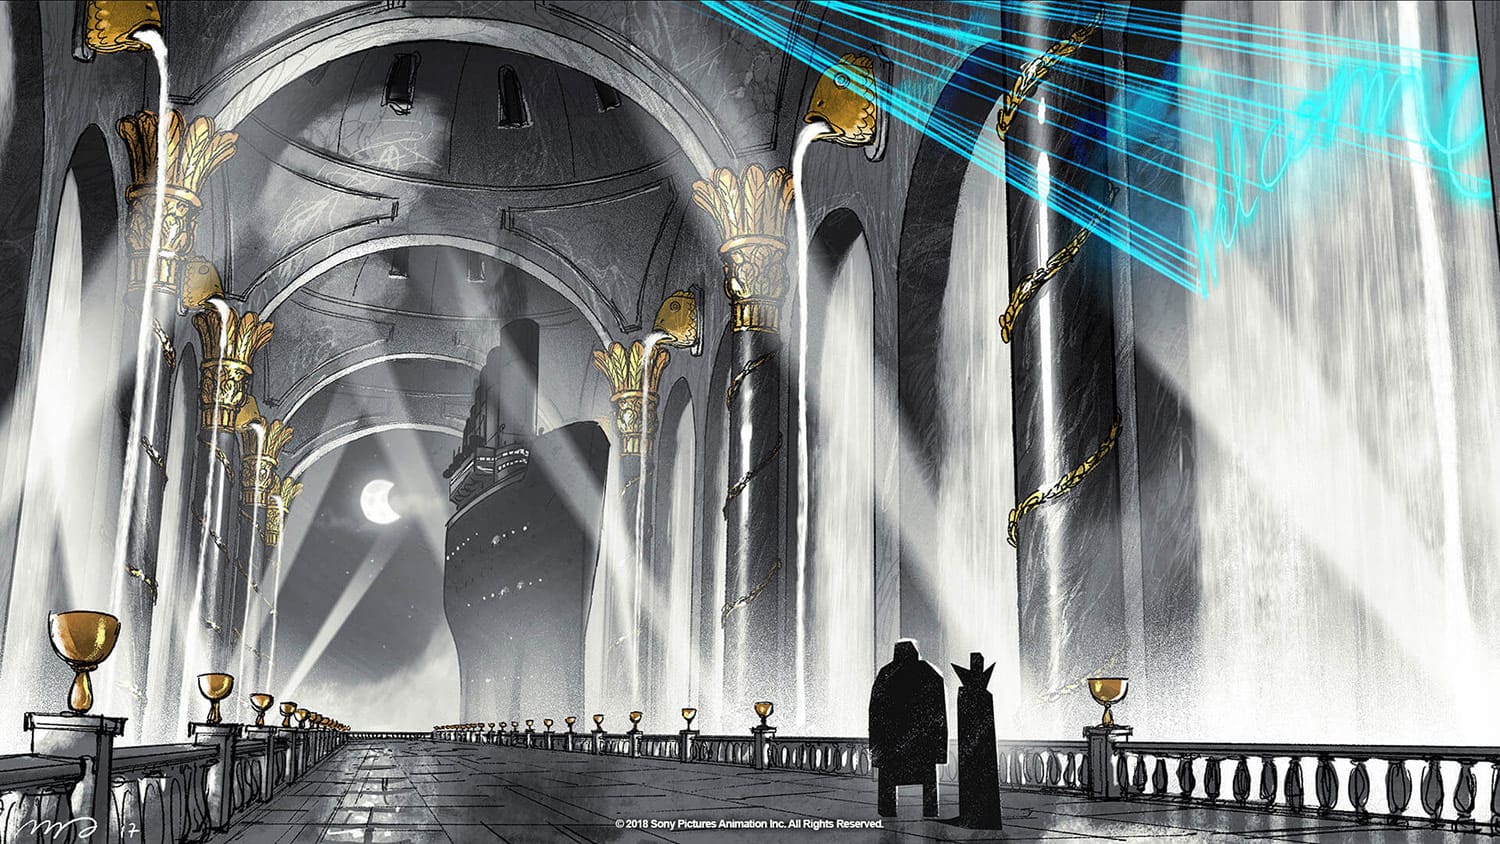 Atlantis design by Sylvain Marc.